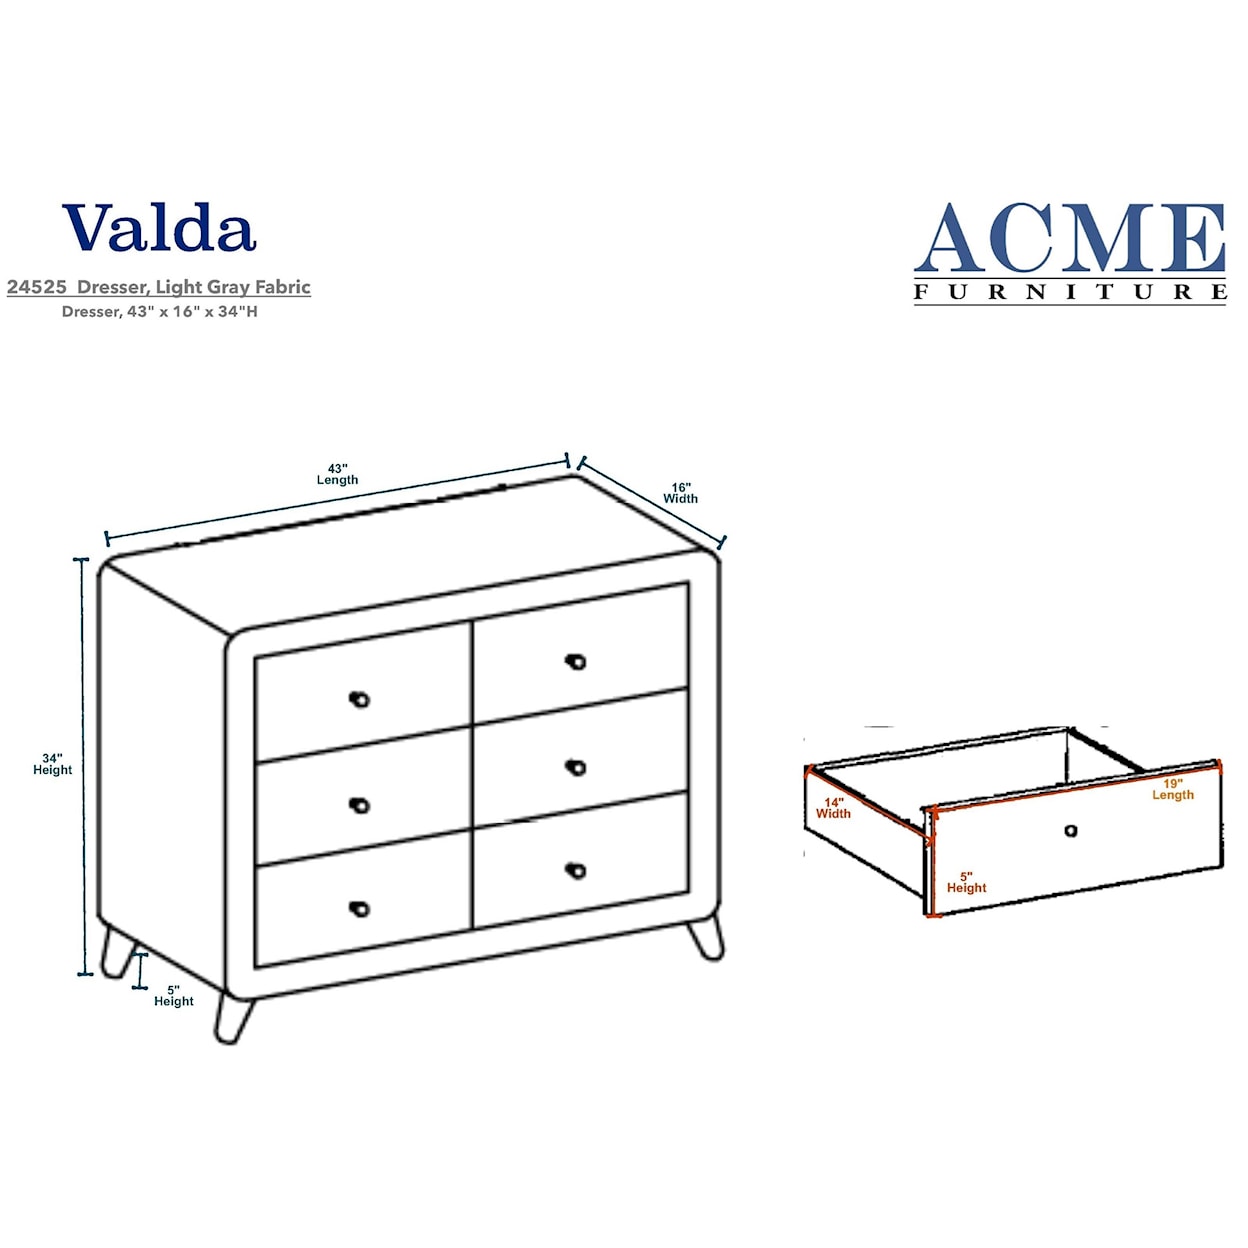 Acme Furniture Valda Dresser